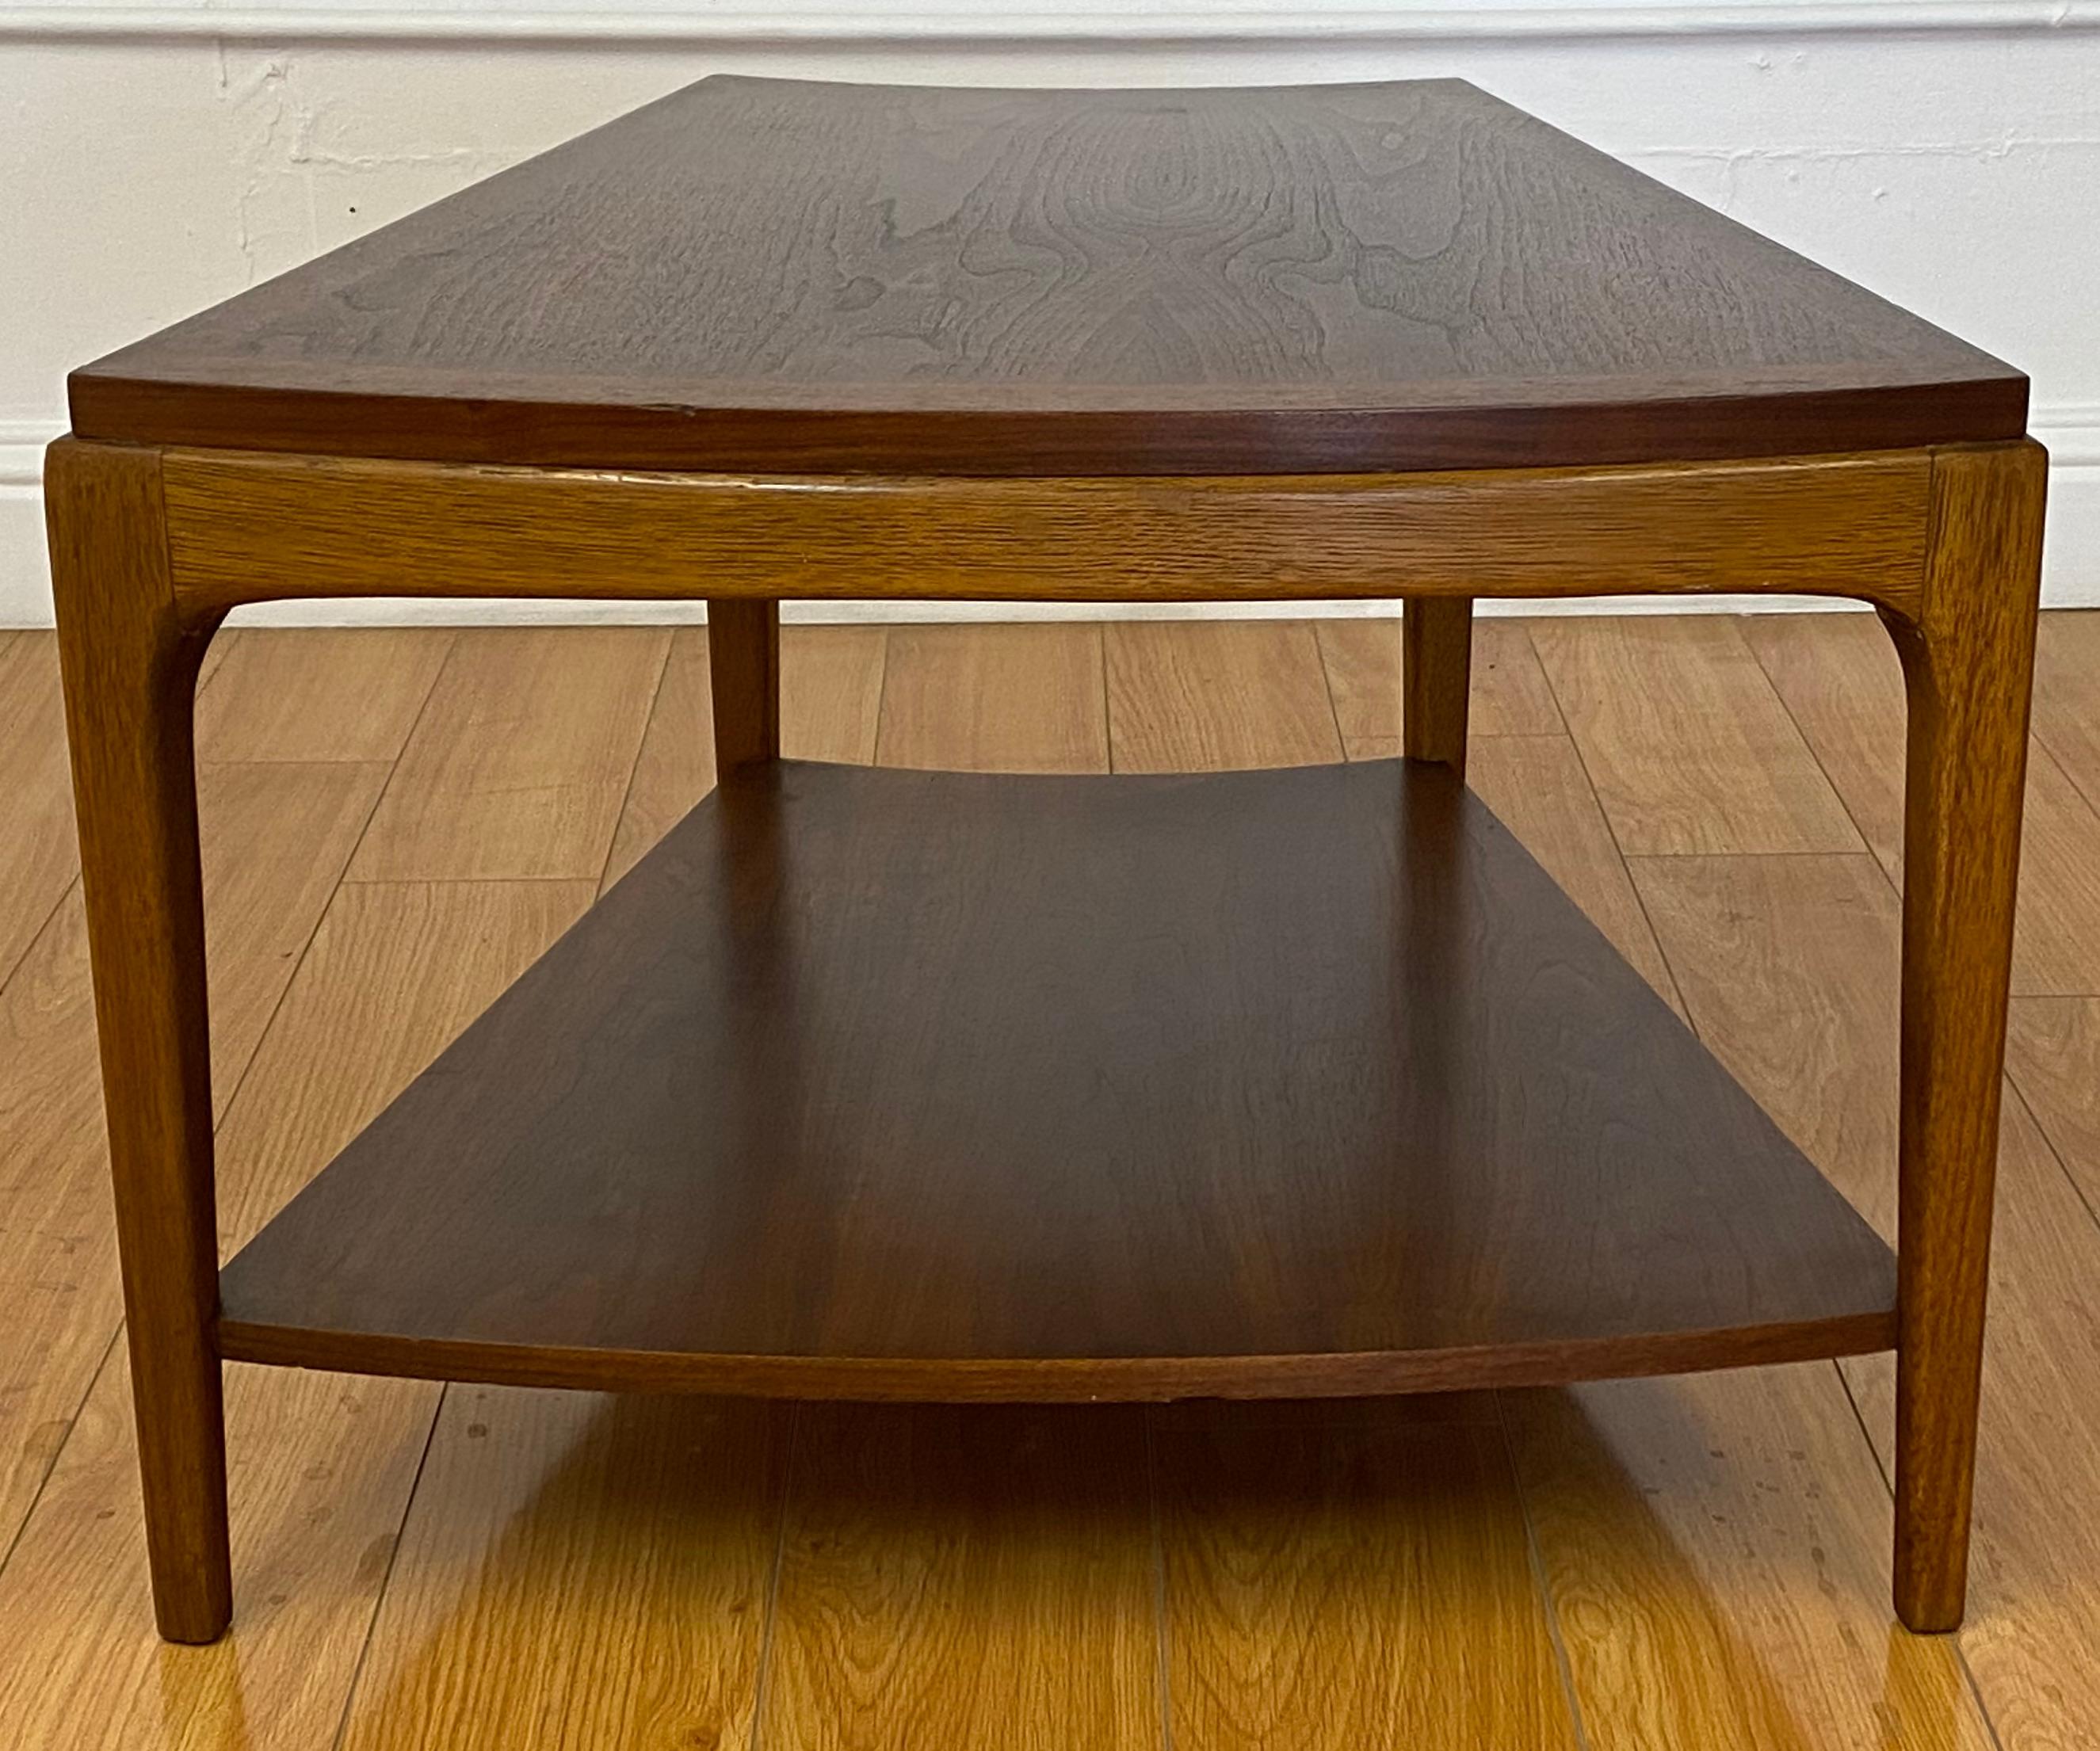 Mid Century Modern walnut corner, side / coffee table by Lane, Altavista, Virginia

Classic mid century pie shape coffee / side table by Lane Furniture

Measures: 26